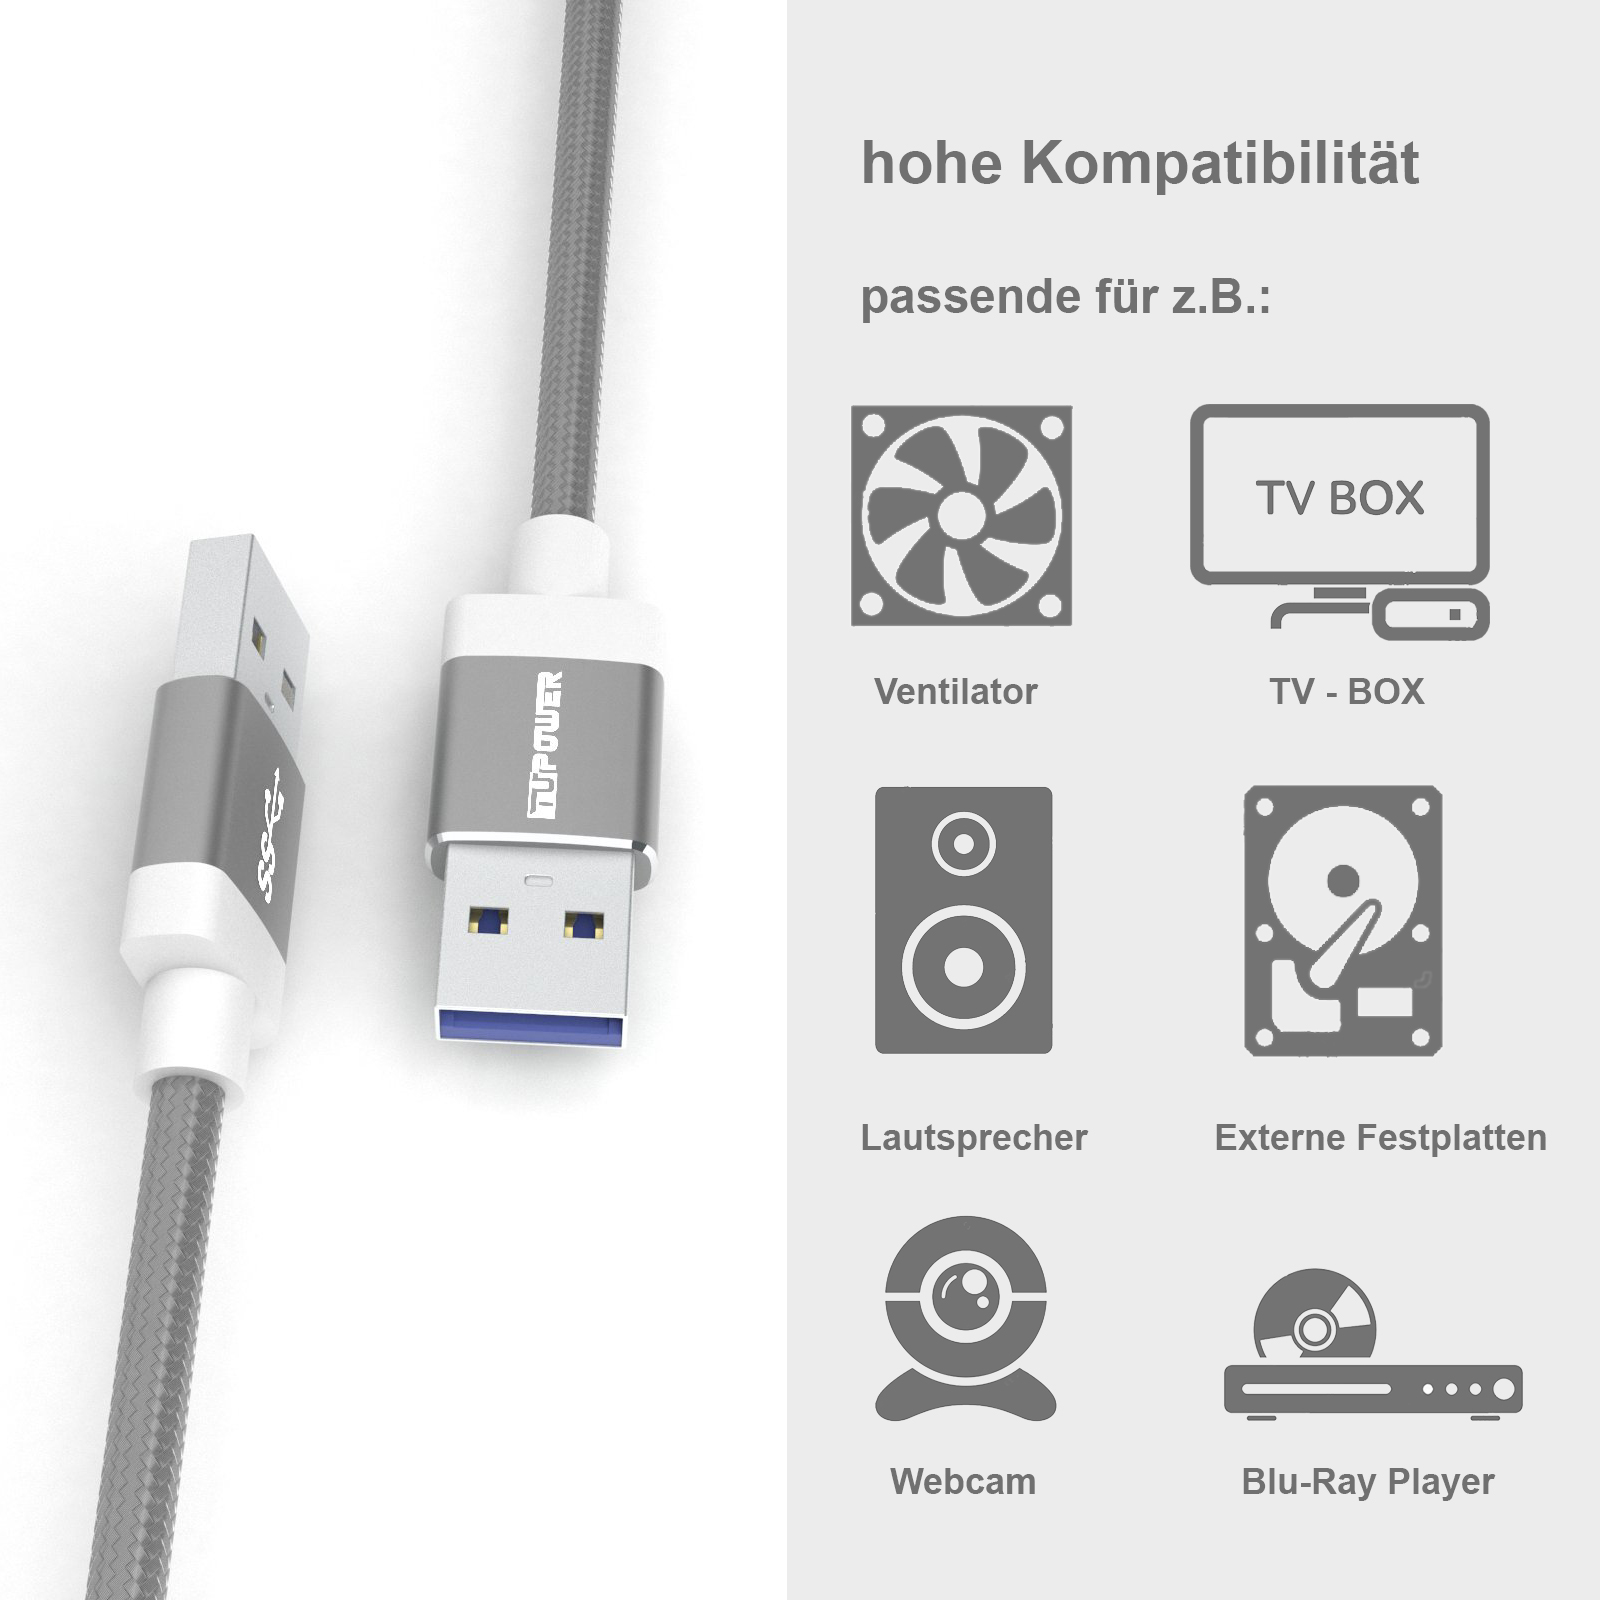 3.0 USB 0,5m Kabel TUPOWER K55 Verbindungskabel USB